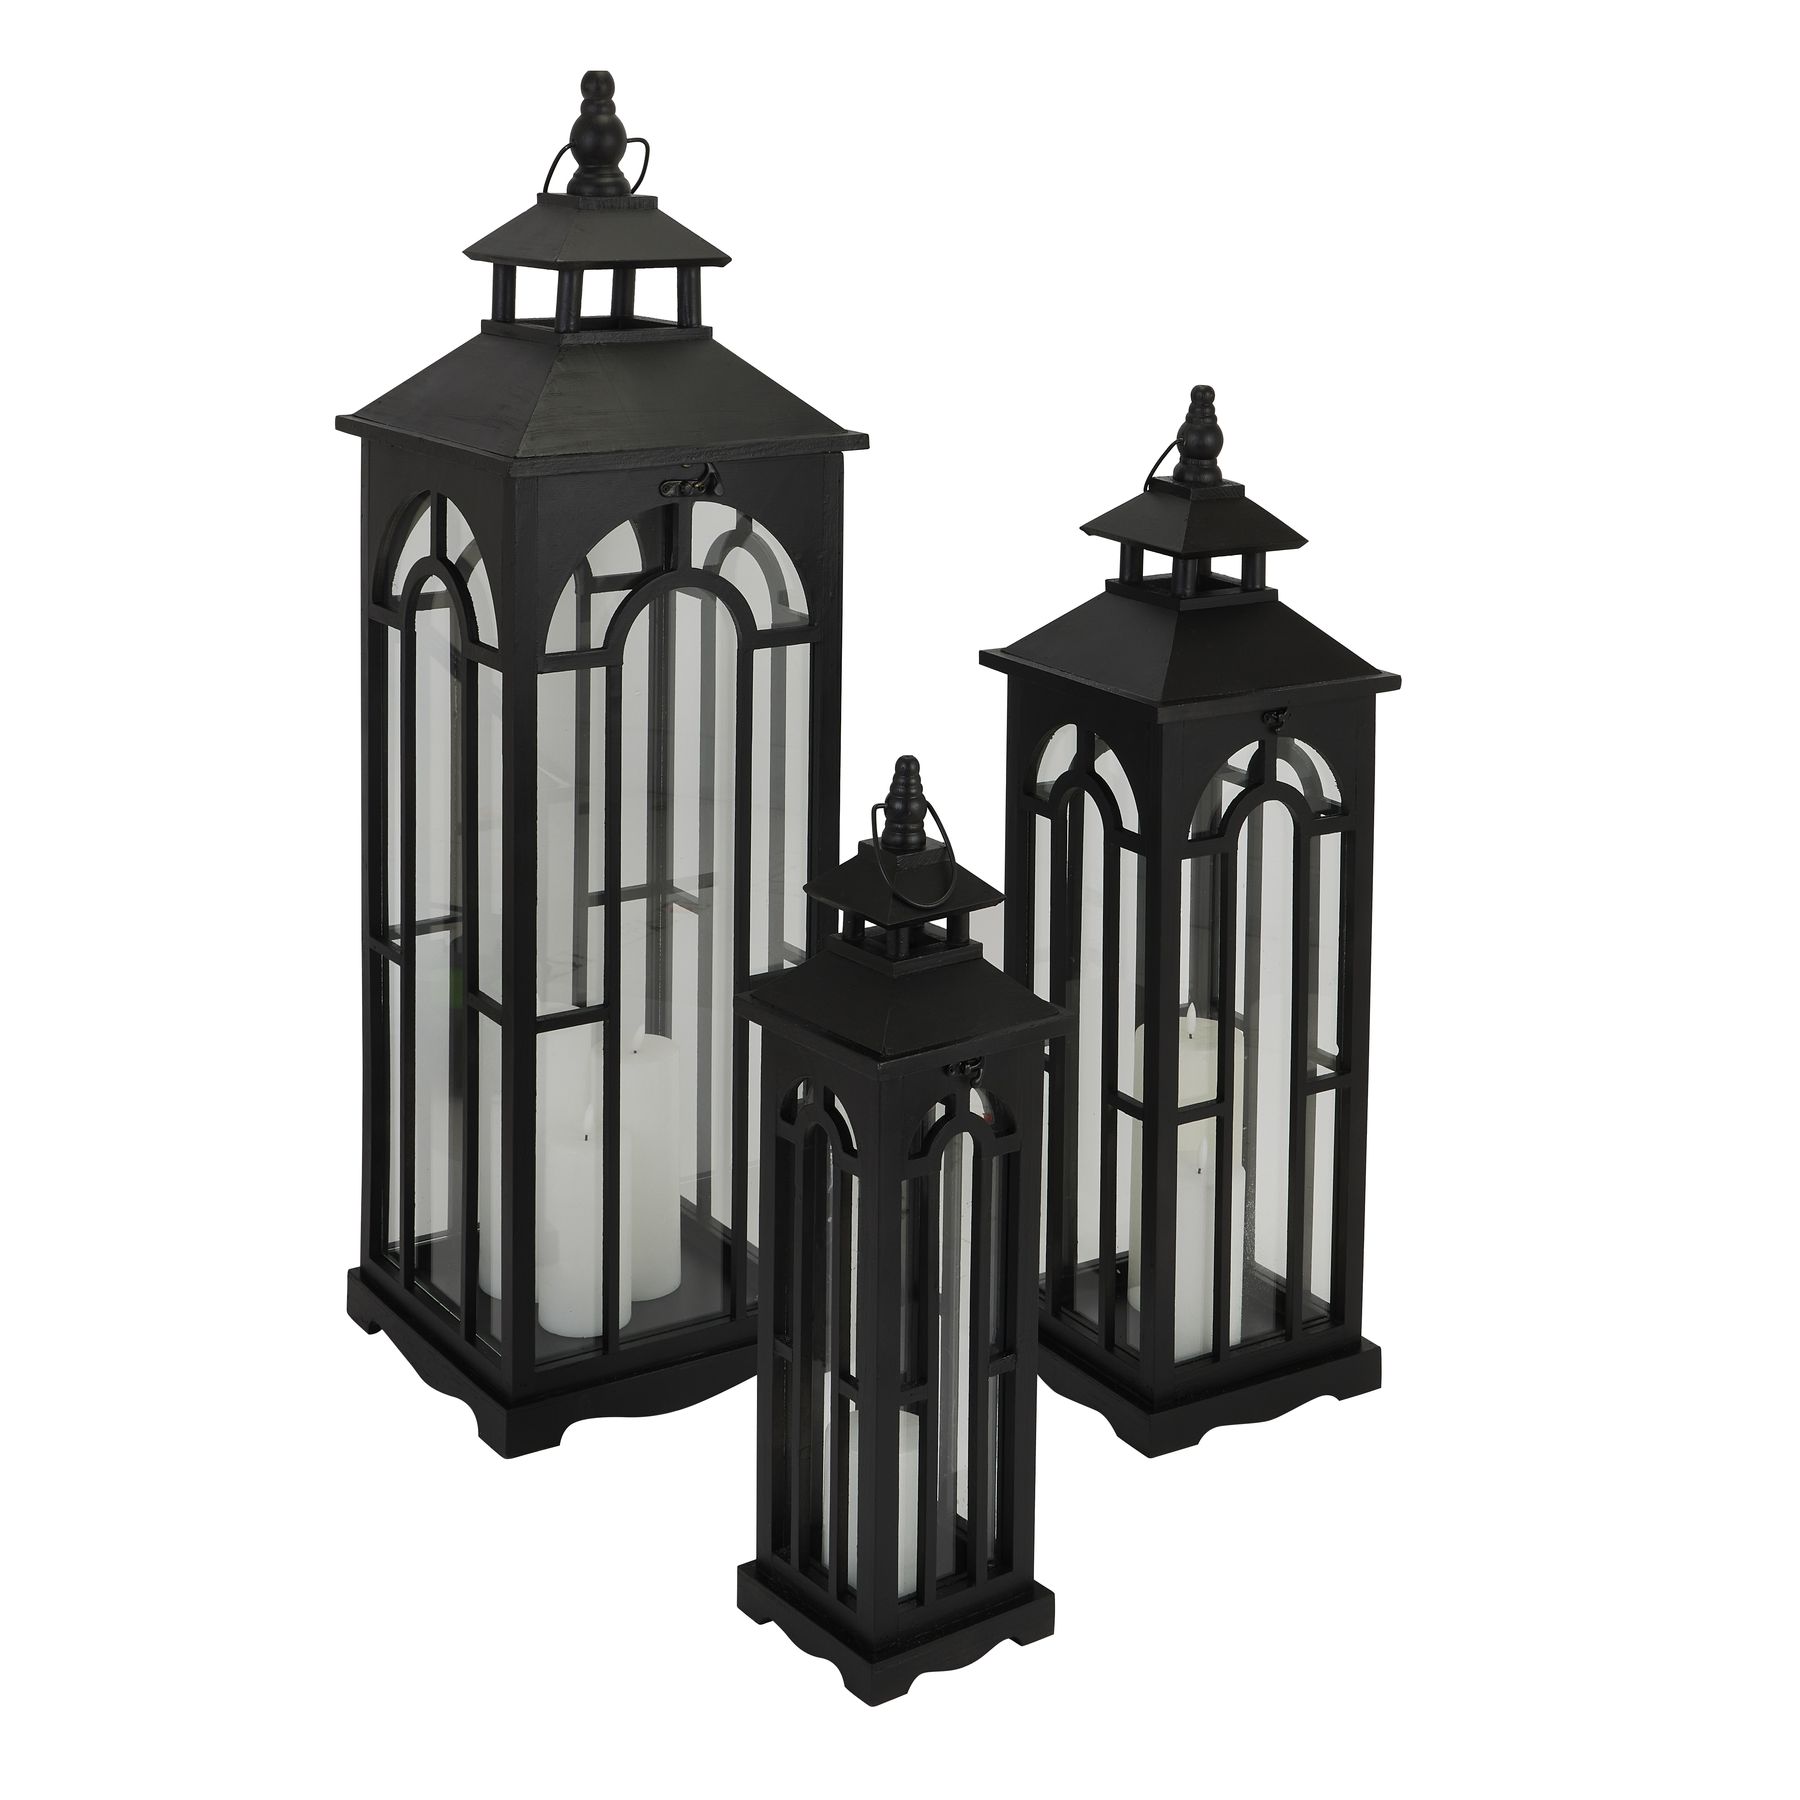 Set Of Three Black Wooden Lanterns With Archway Design - Image 1